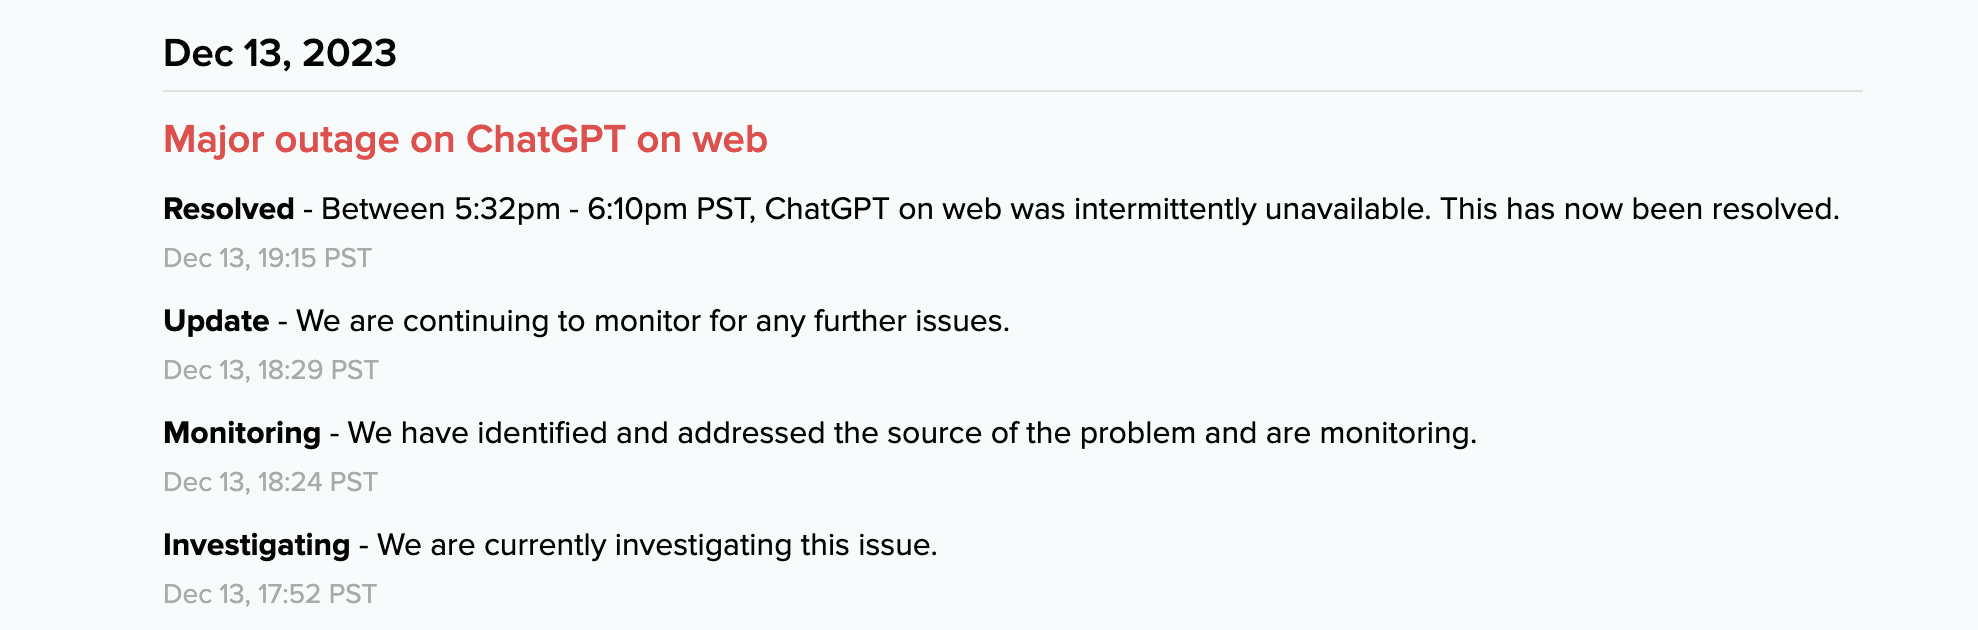 OpenAI：ChatGPT 网络出现重大故障，现已恢复正常